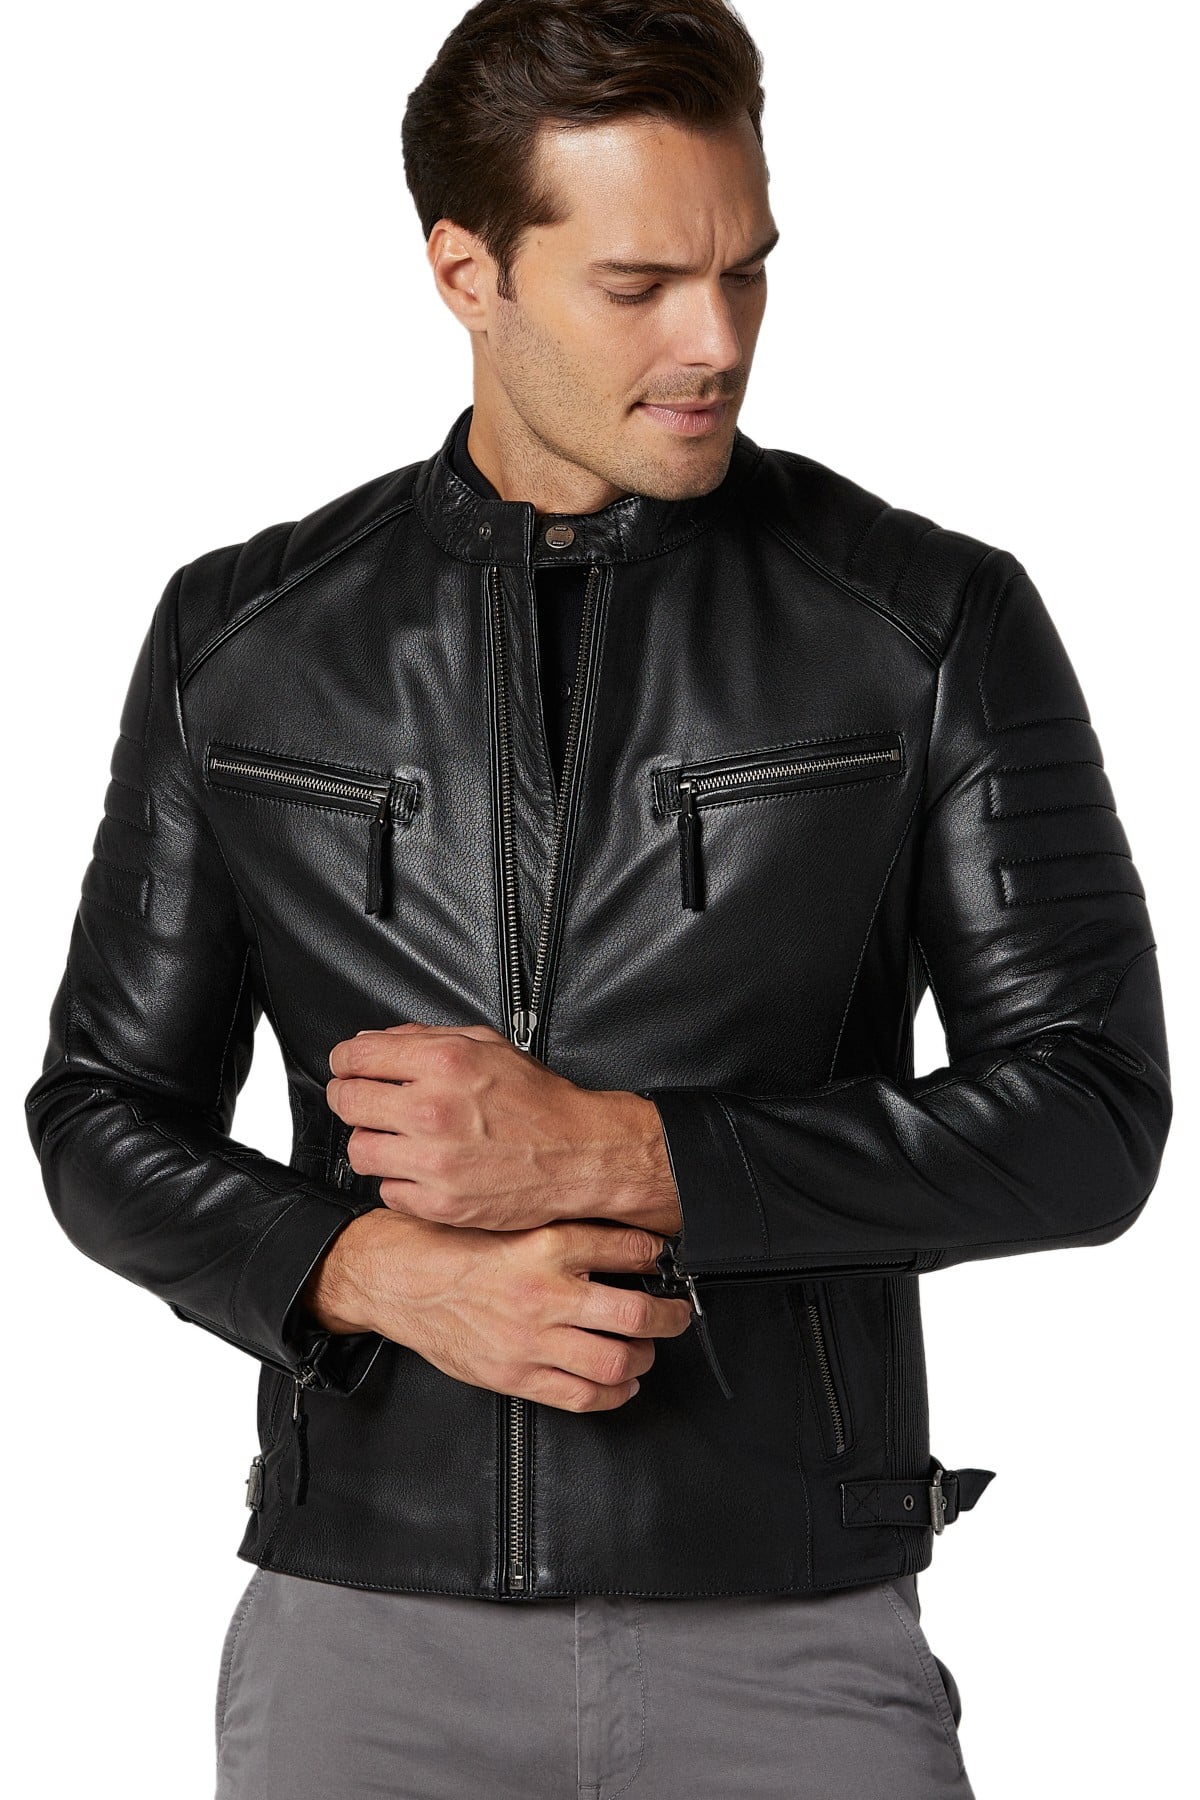 Marlon Teixeira Men's 100 % Real Black Leather Biker Style Classic Jacket